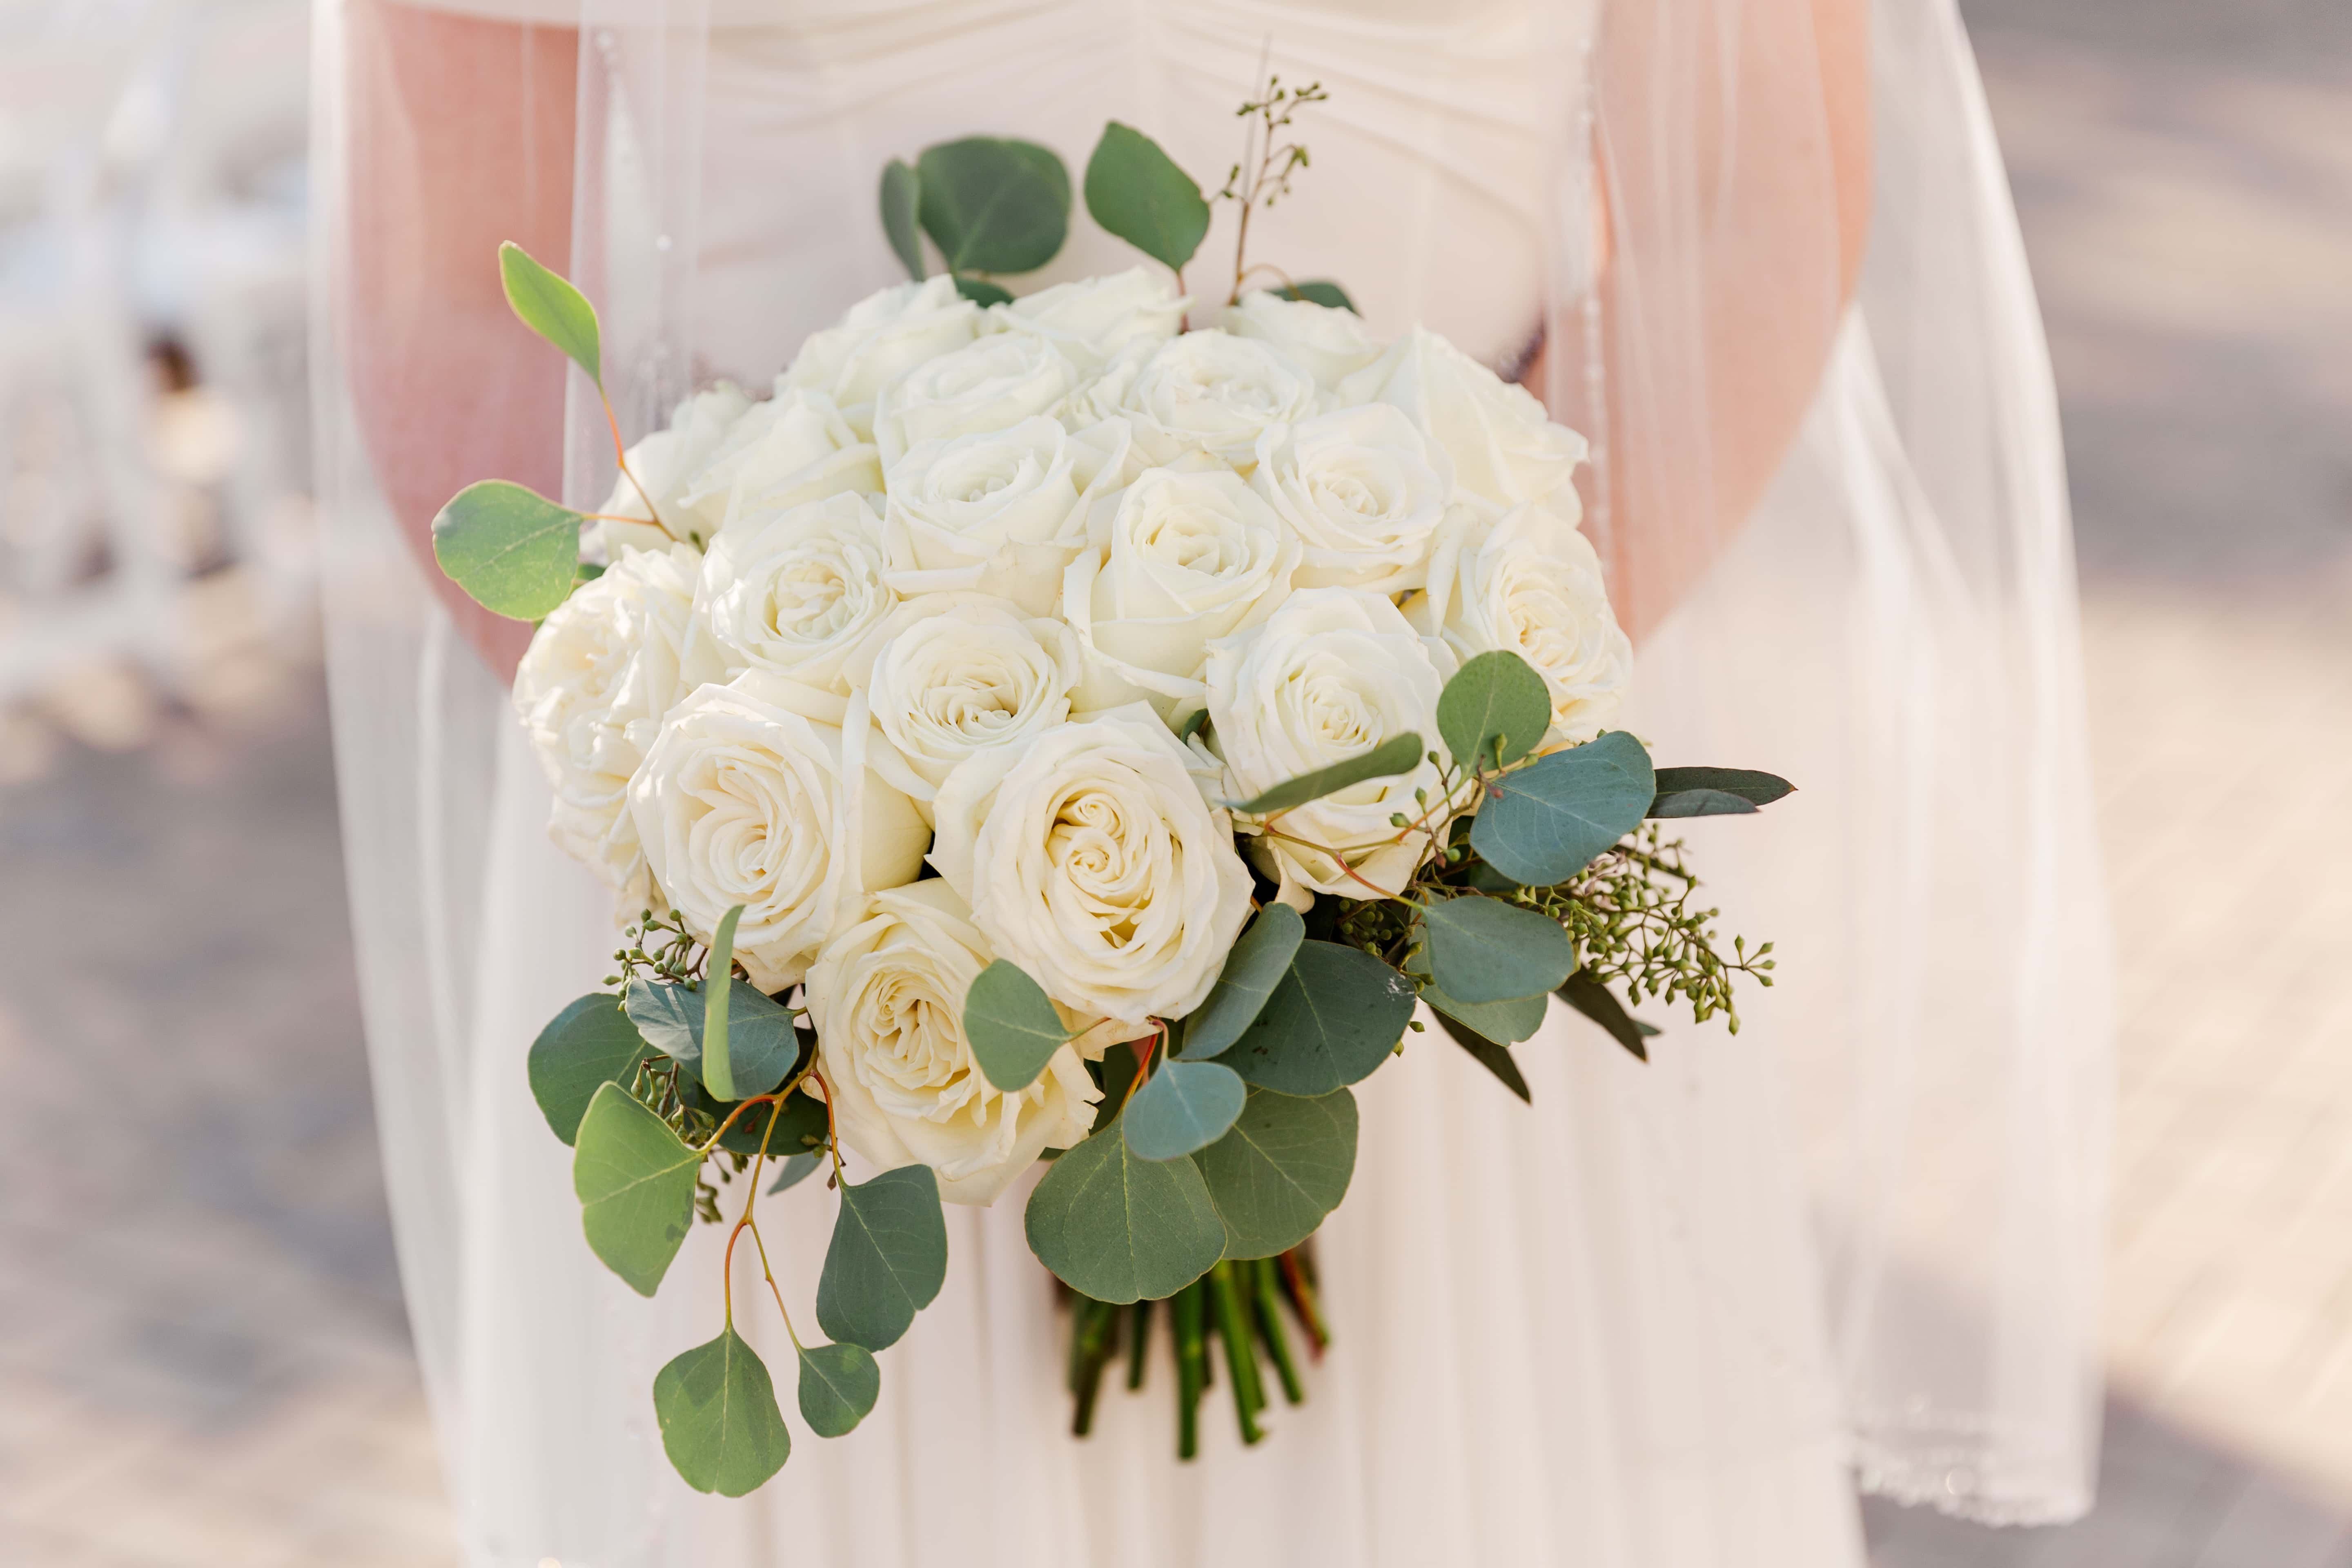 Marry Me Floral - McHenry, IL, US, wholesale flowers online